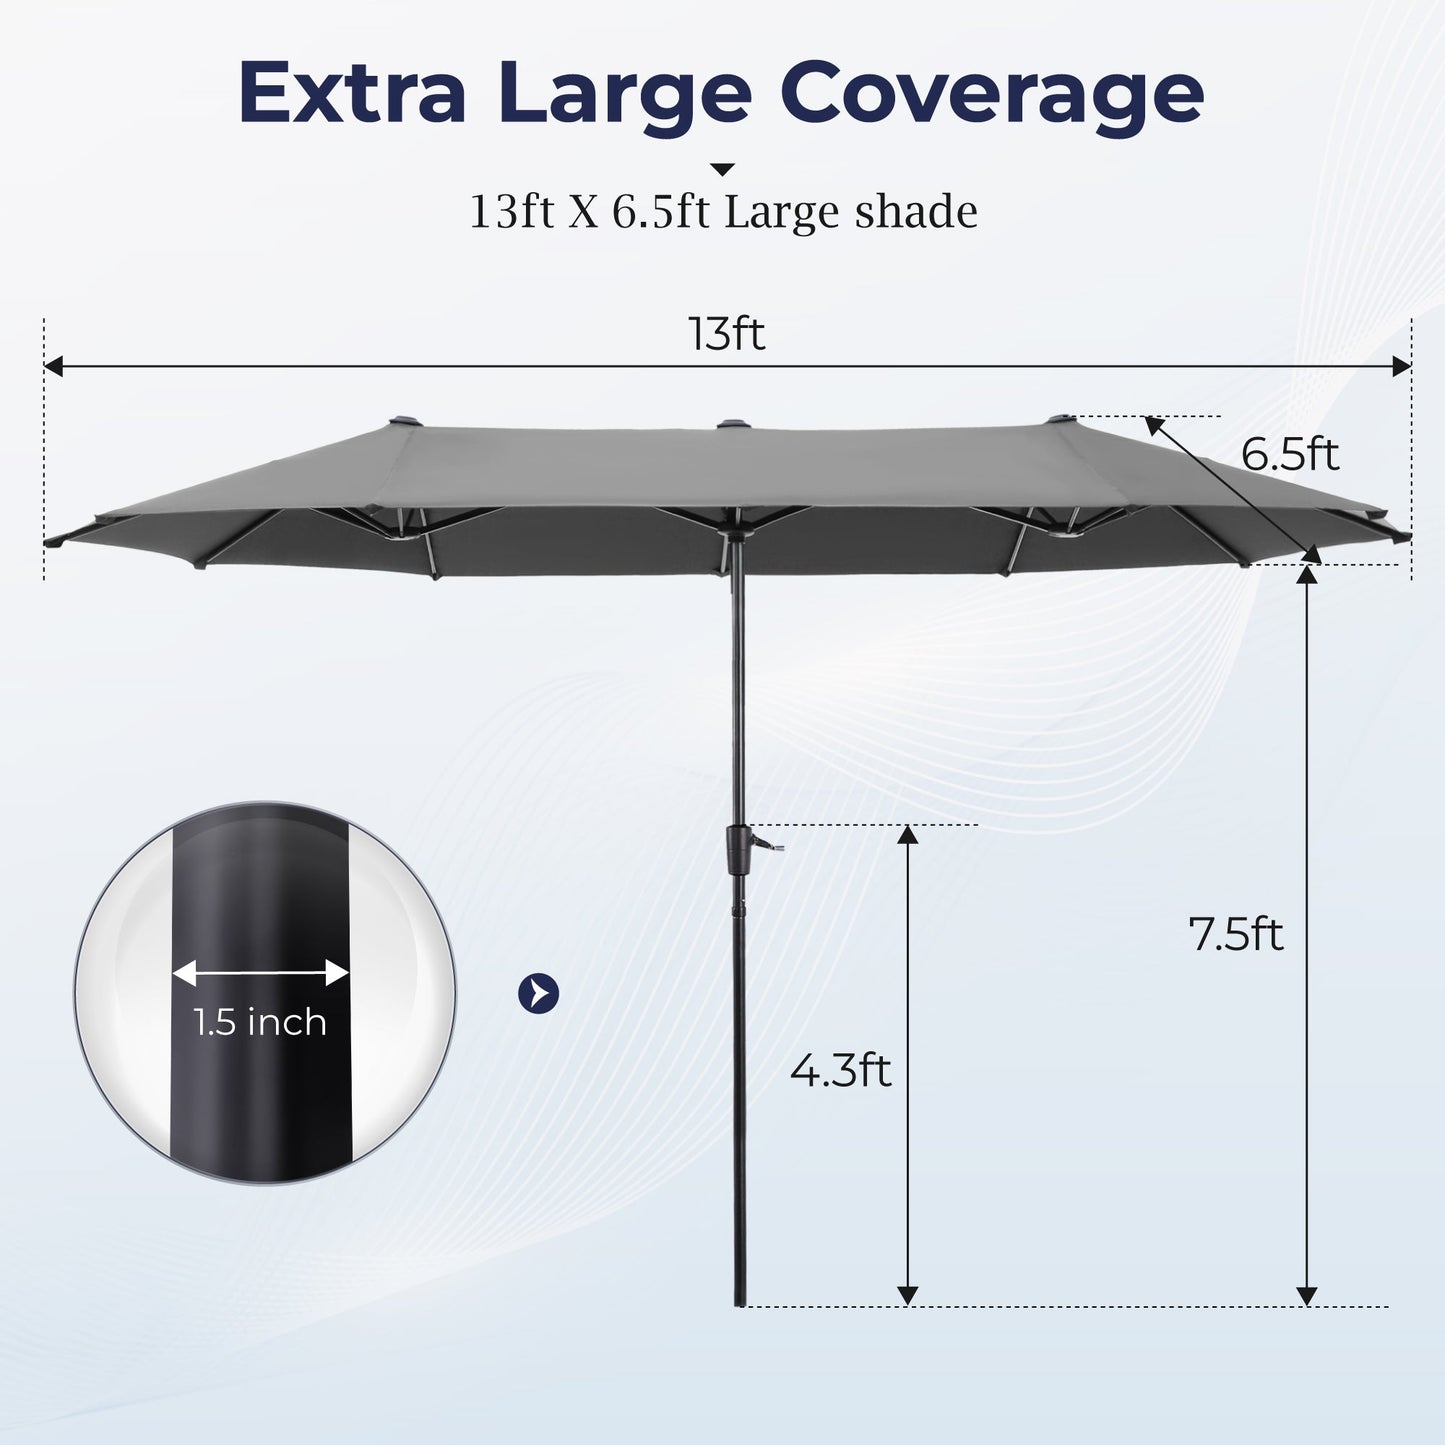 Alpha Joy 13x6.5ft Double-Sided Extra Large Outdoor Patio Market Rectangle Umbrella with Crank Handle, Light Gray